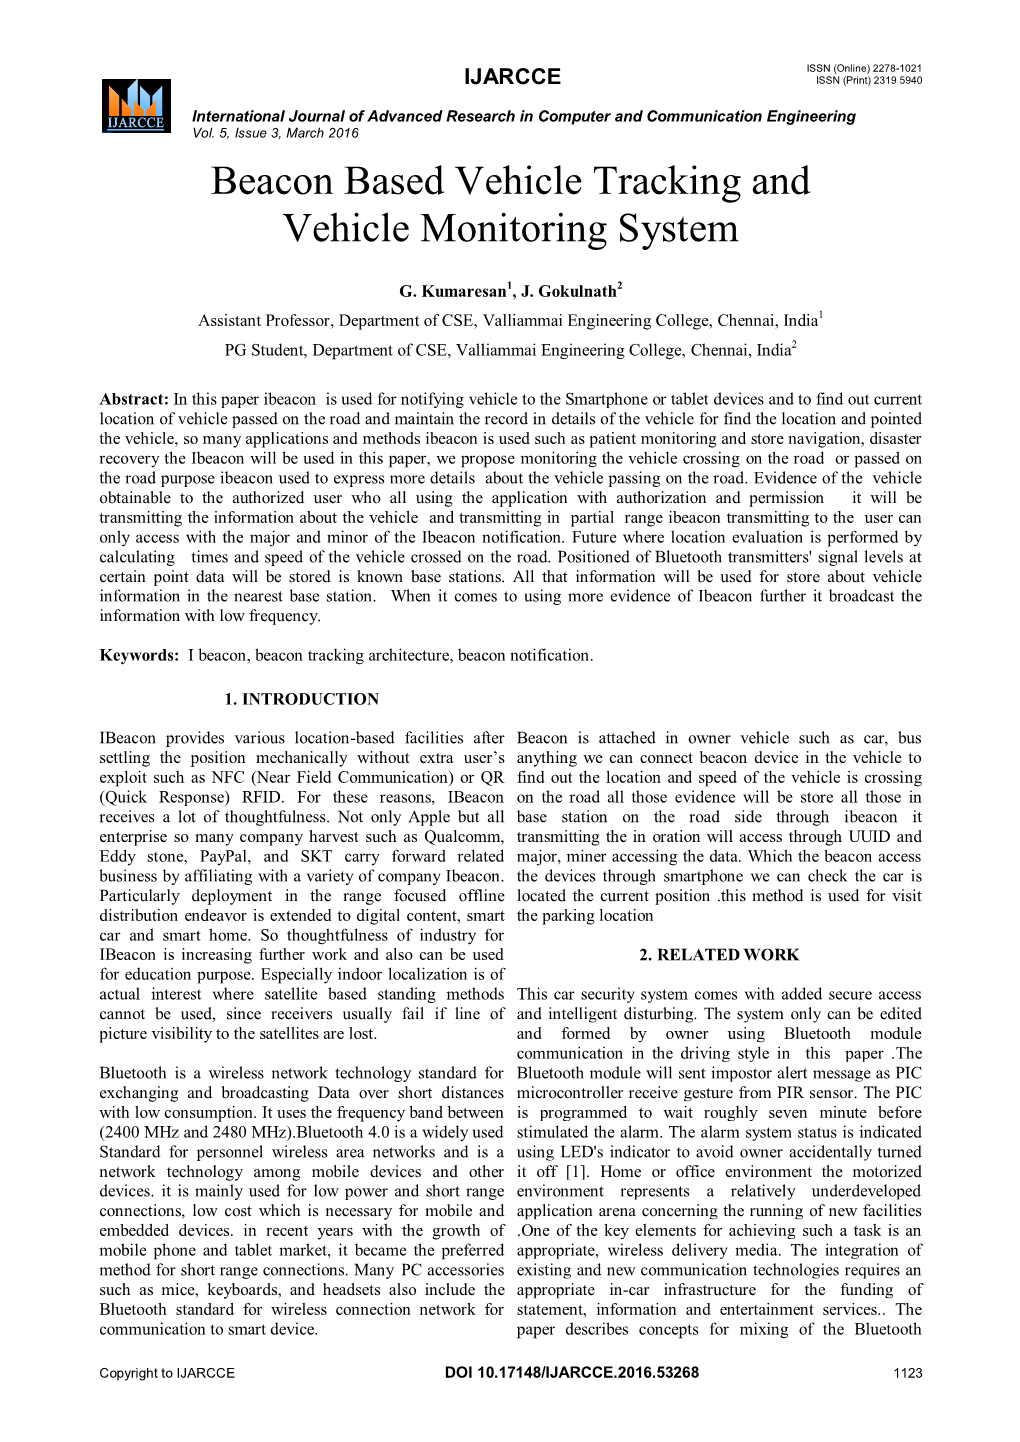 Beacon Based Vehicle Tracking and Vehicle Monitoring System